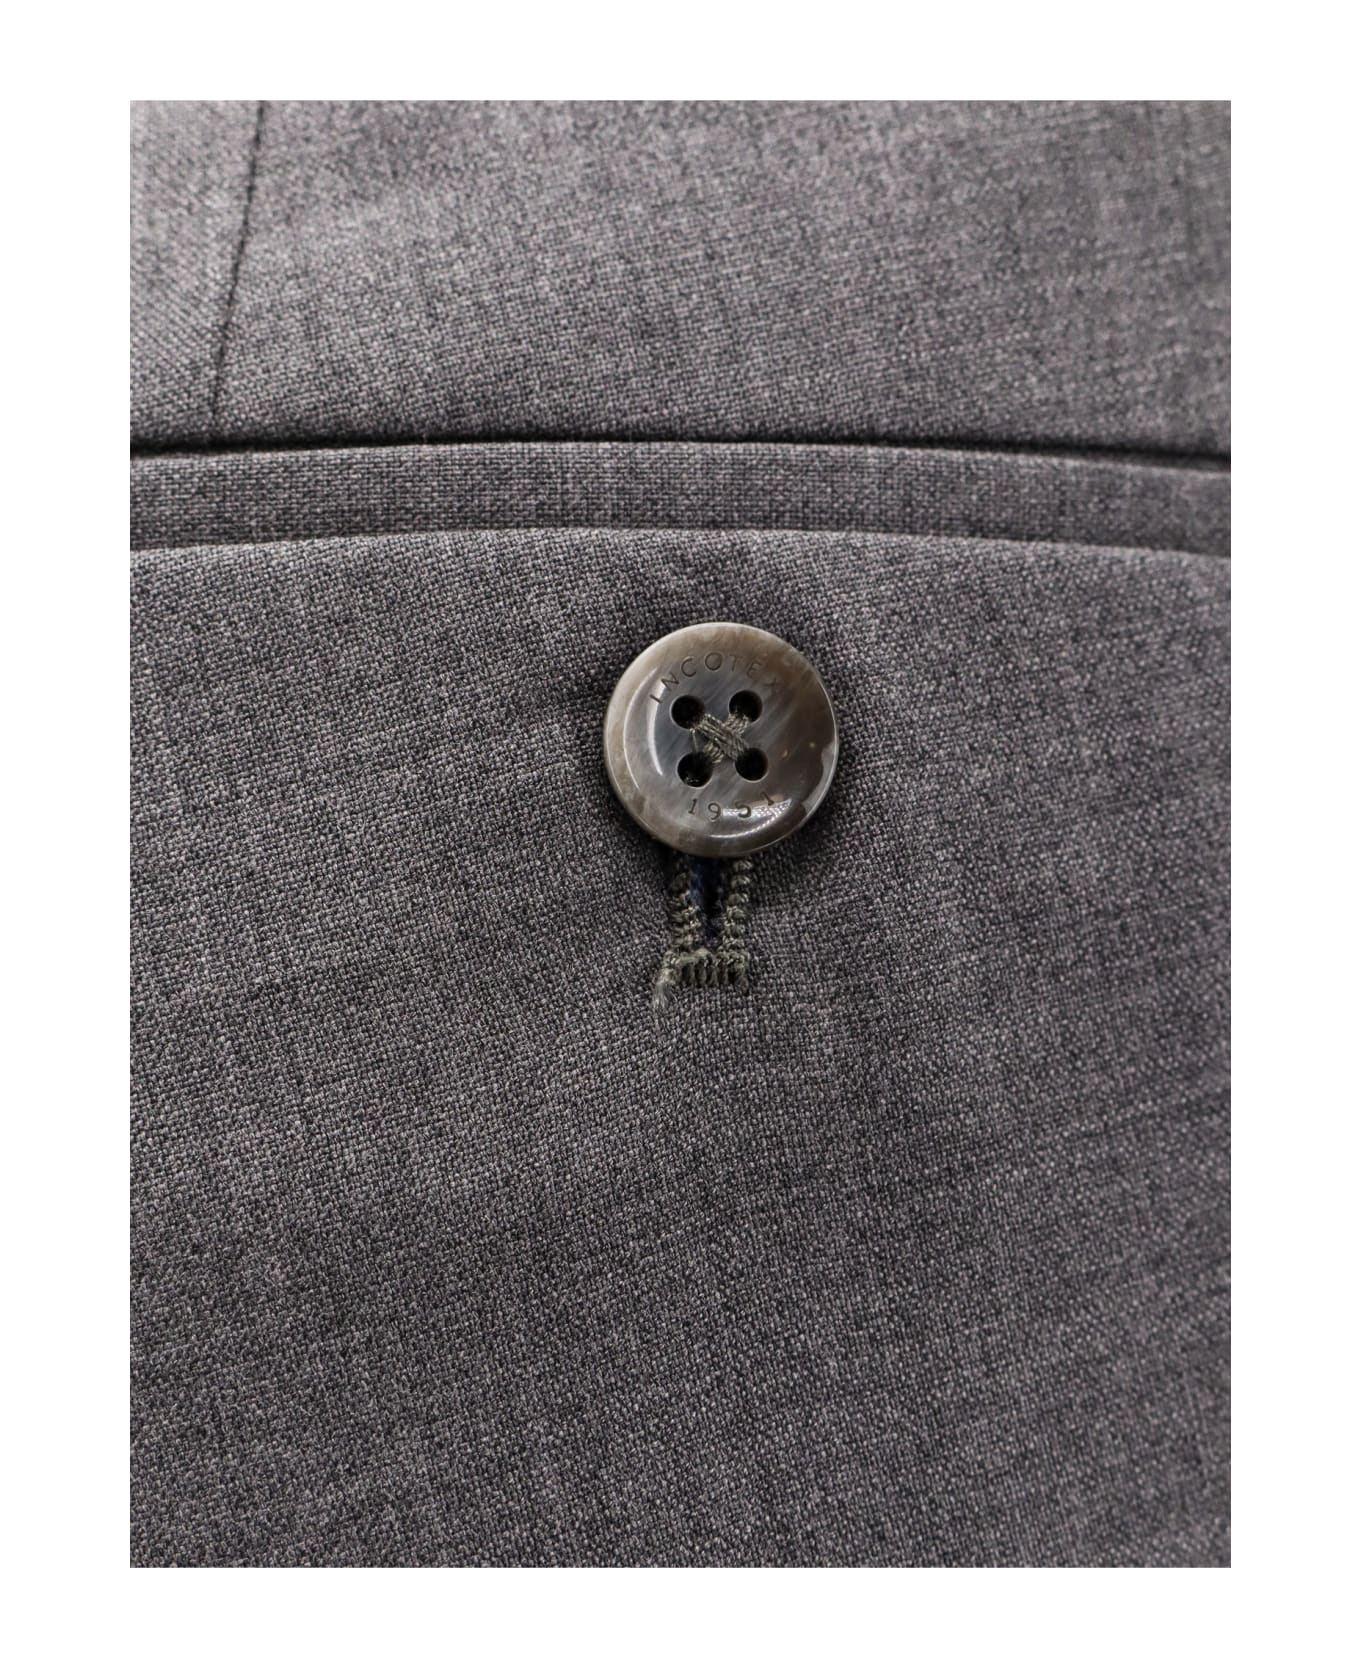 Incotex 54 Trouser - Grey